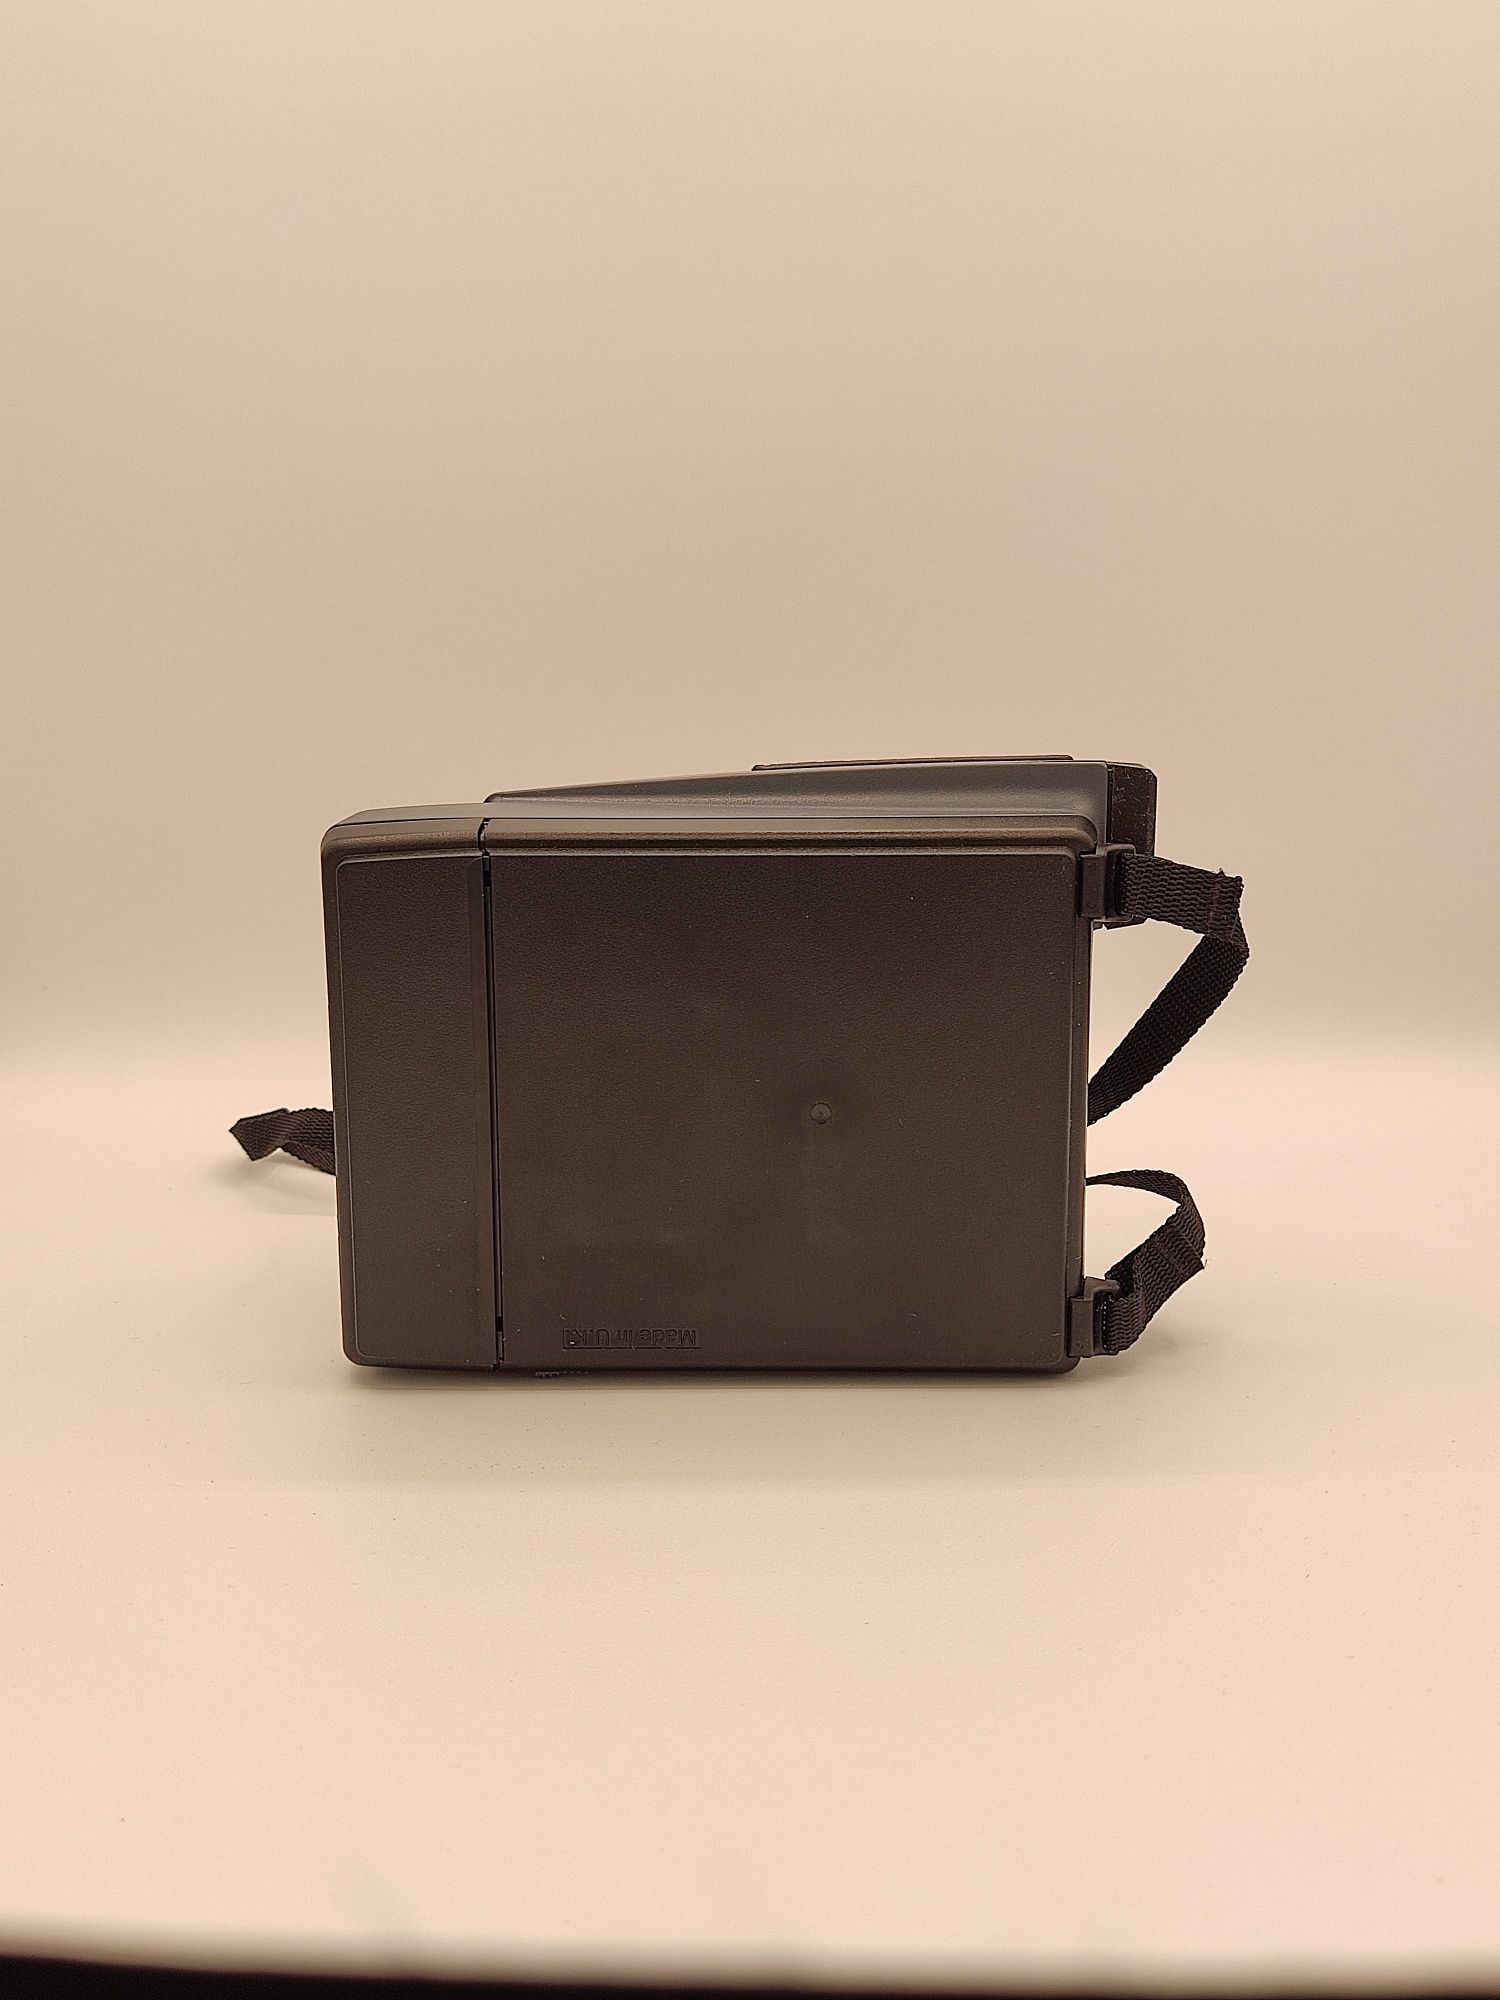 Polaroid Impulse Portrait grey - Nova